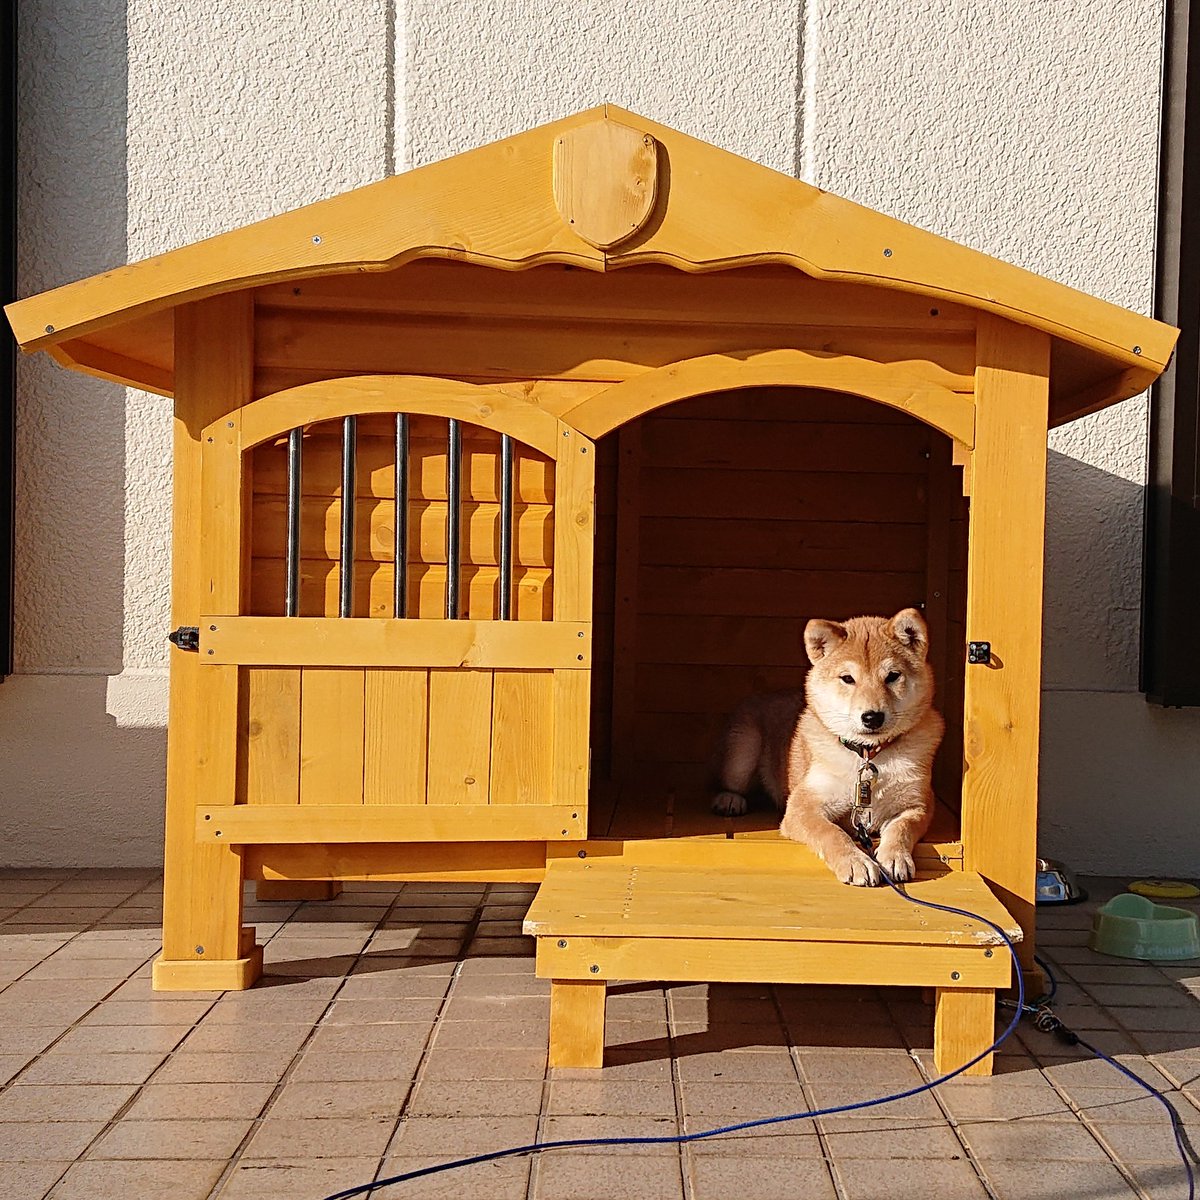 S Y 柴犬 くん太 1歳 على تويتر 犬小屋 買いました 犬小屋 アイリスオーヤマ アイリスオーヤマの犬小屋 柴犬 柴犬のいる暮らし